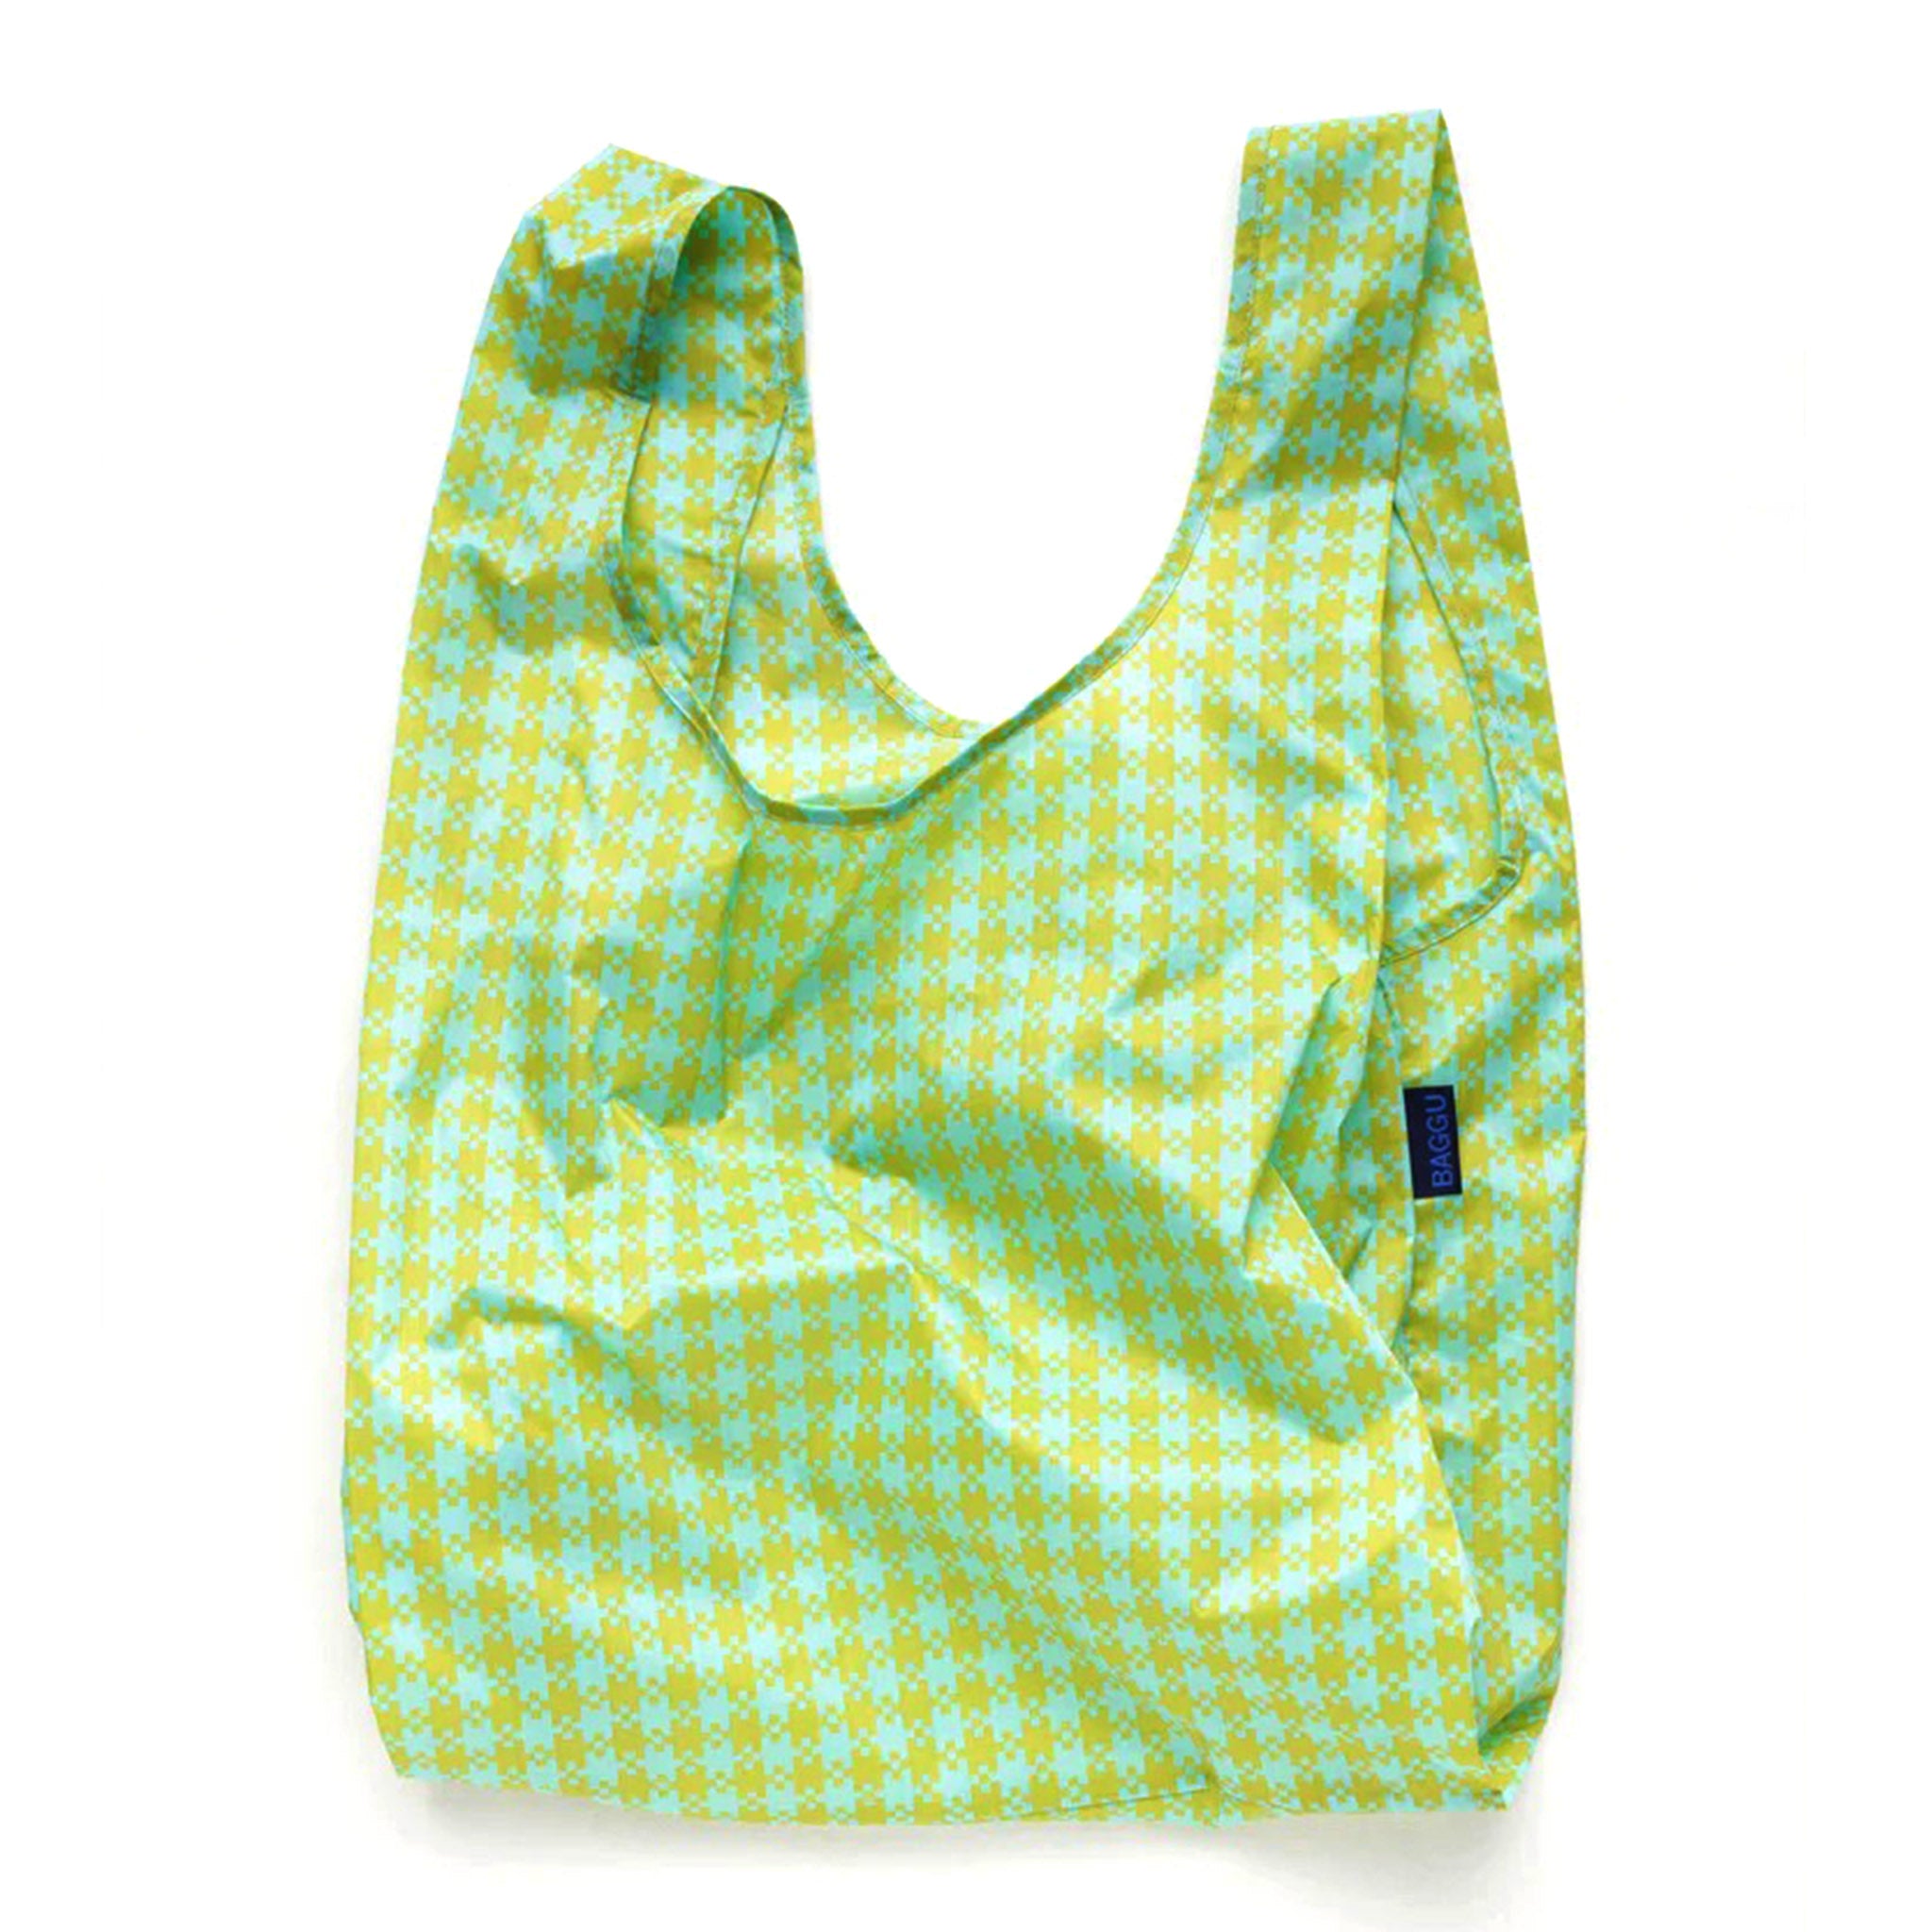 mint green bag